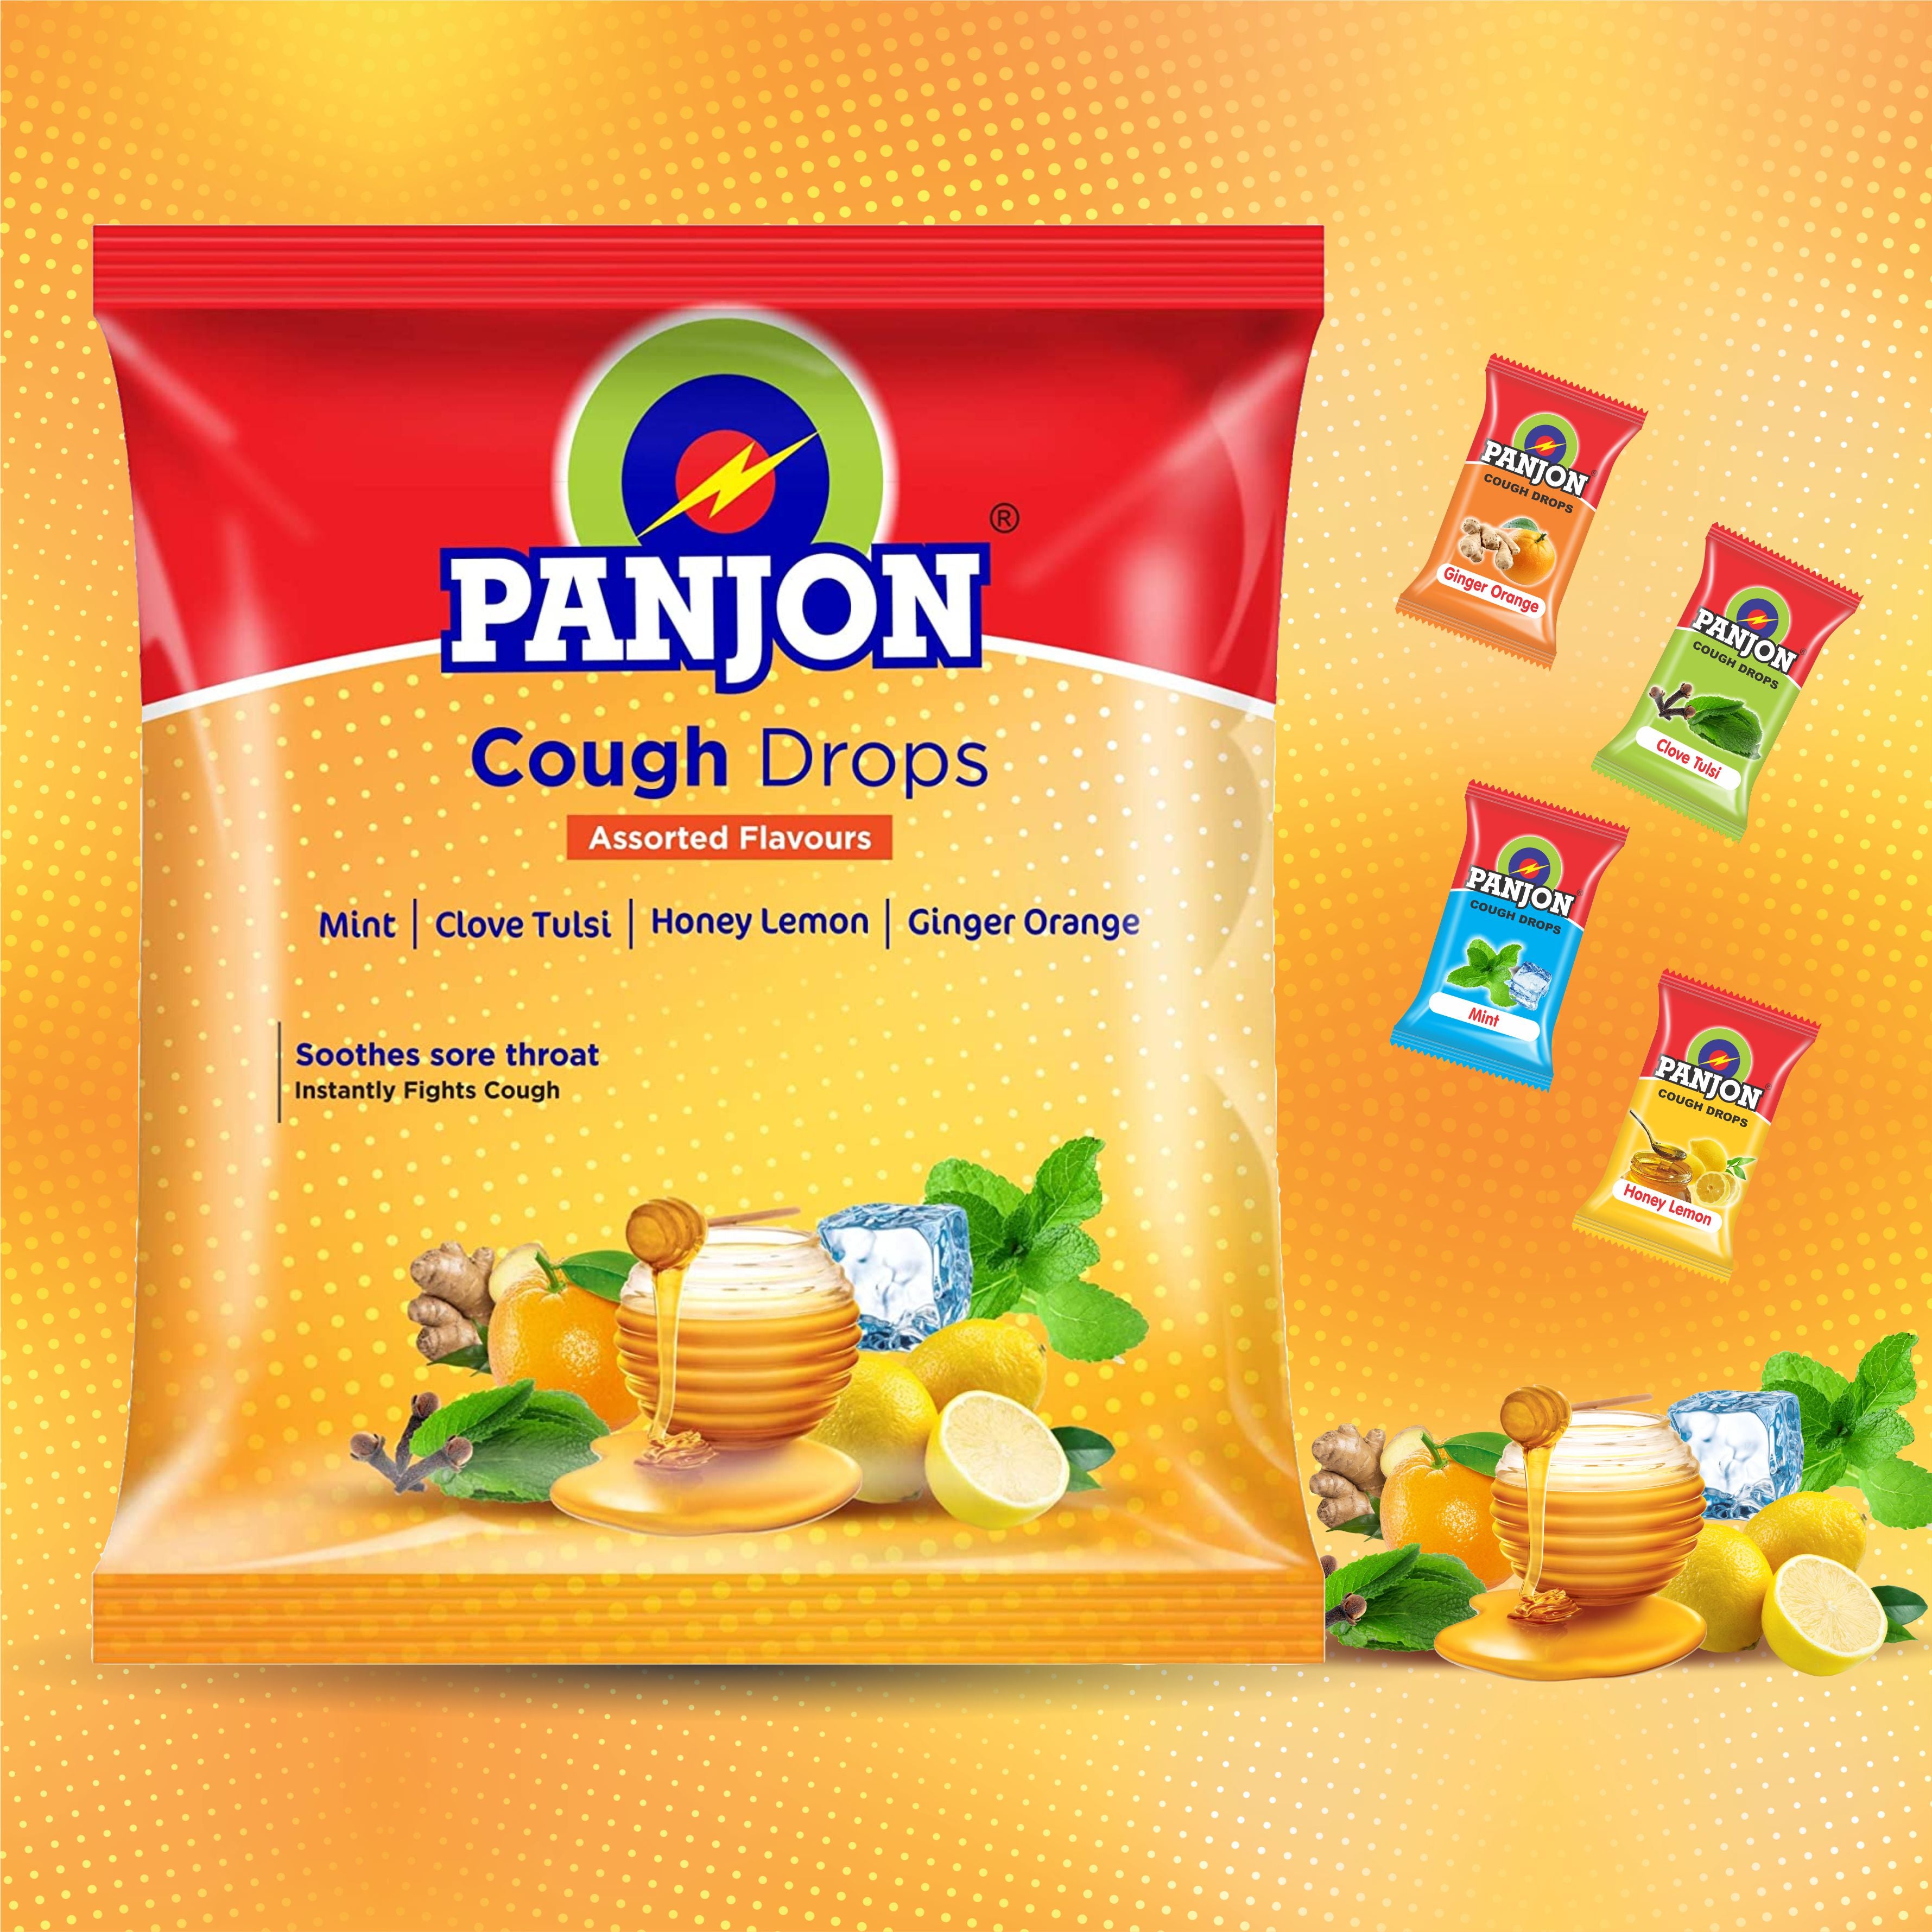 Panjon Cough Drops, Assorted Flavours Mint, Clove Tulsi, Honey Lemon & Ginger Orange, (Pack of 200), 540g